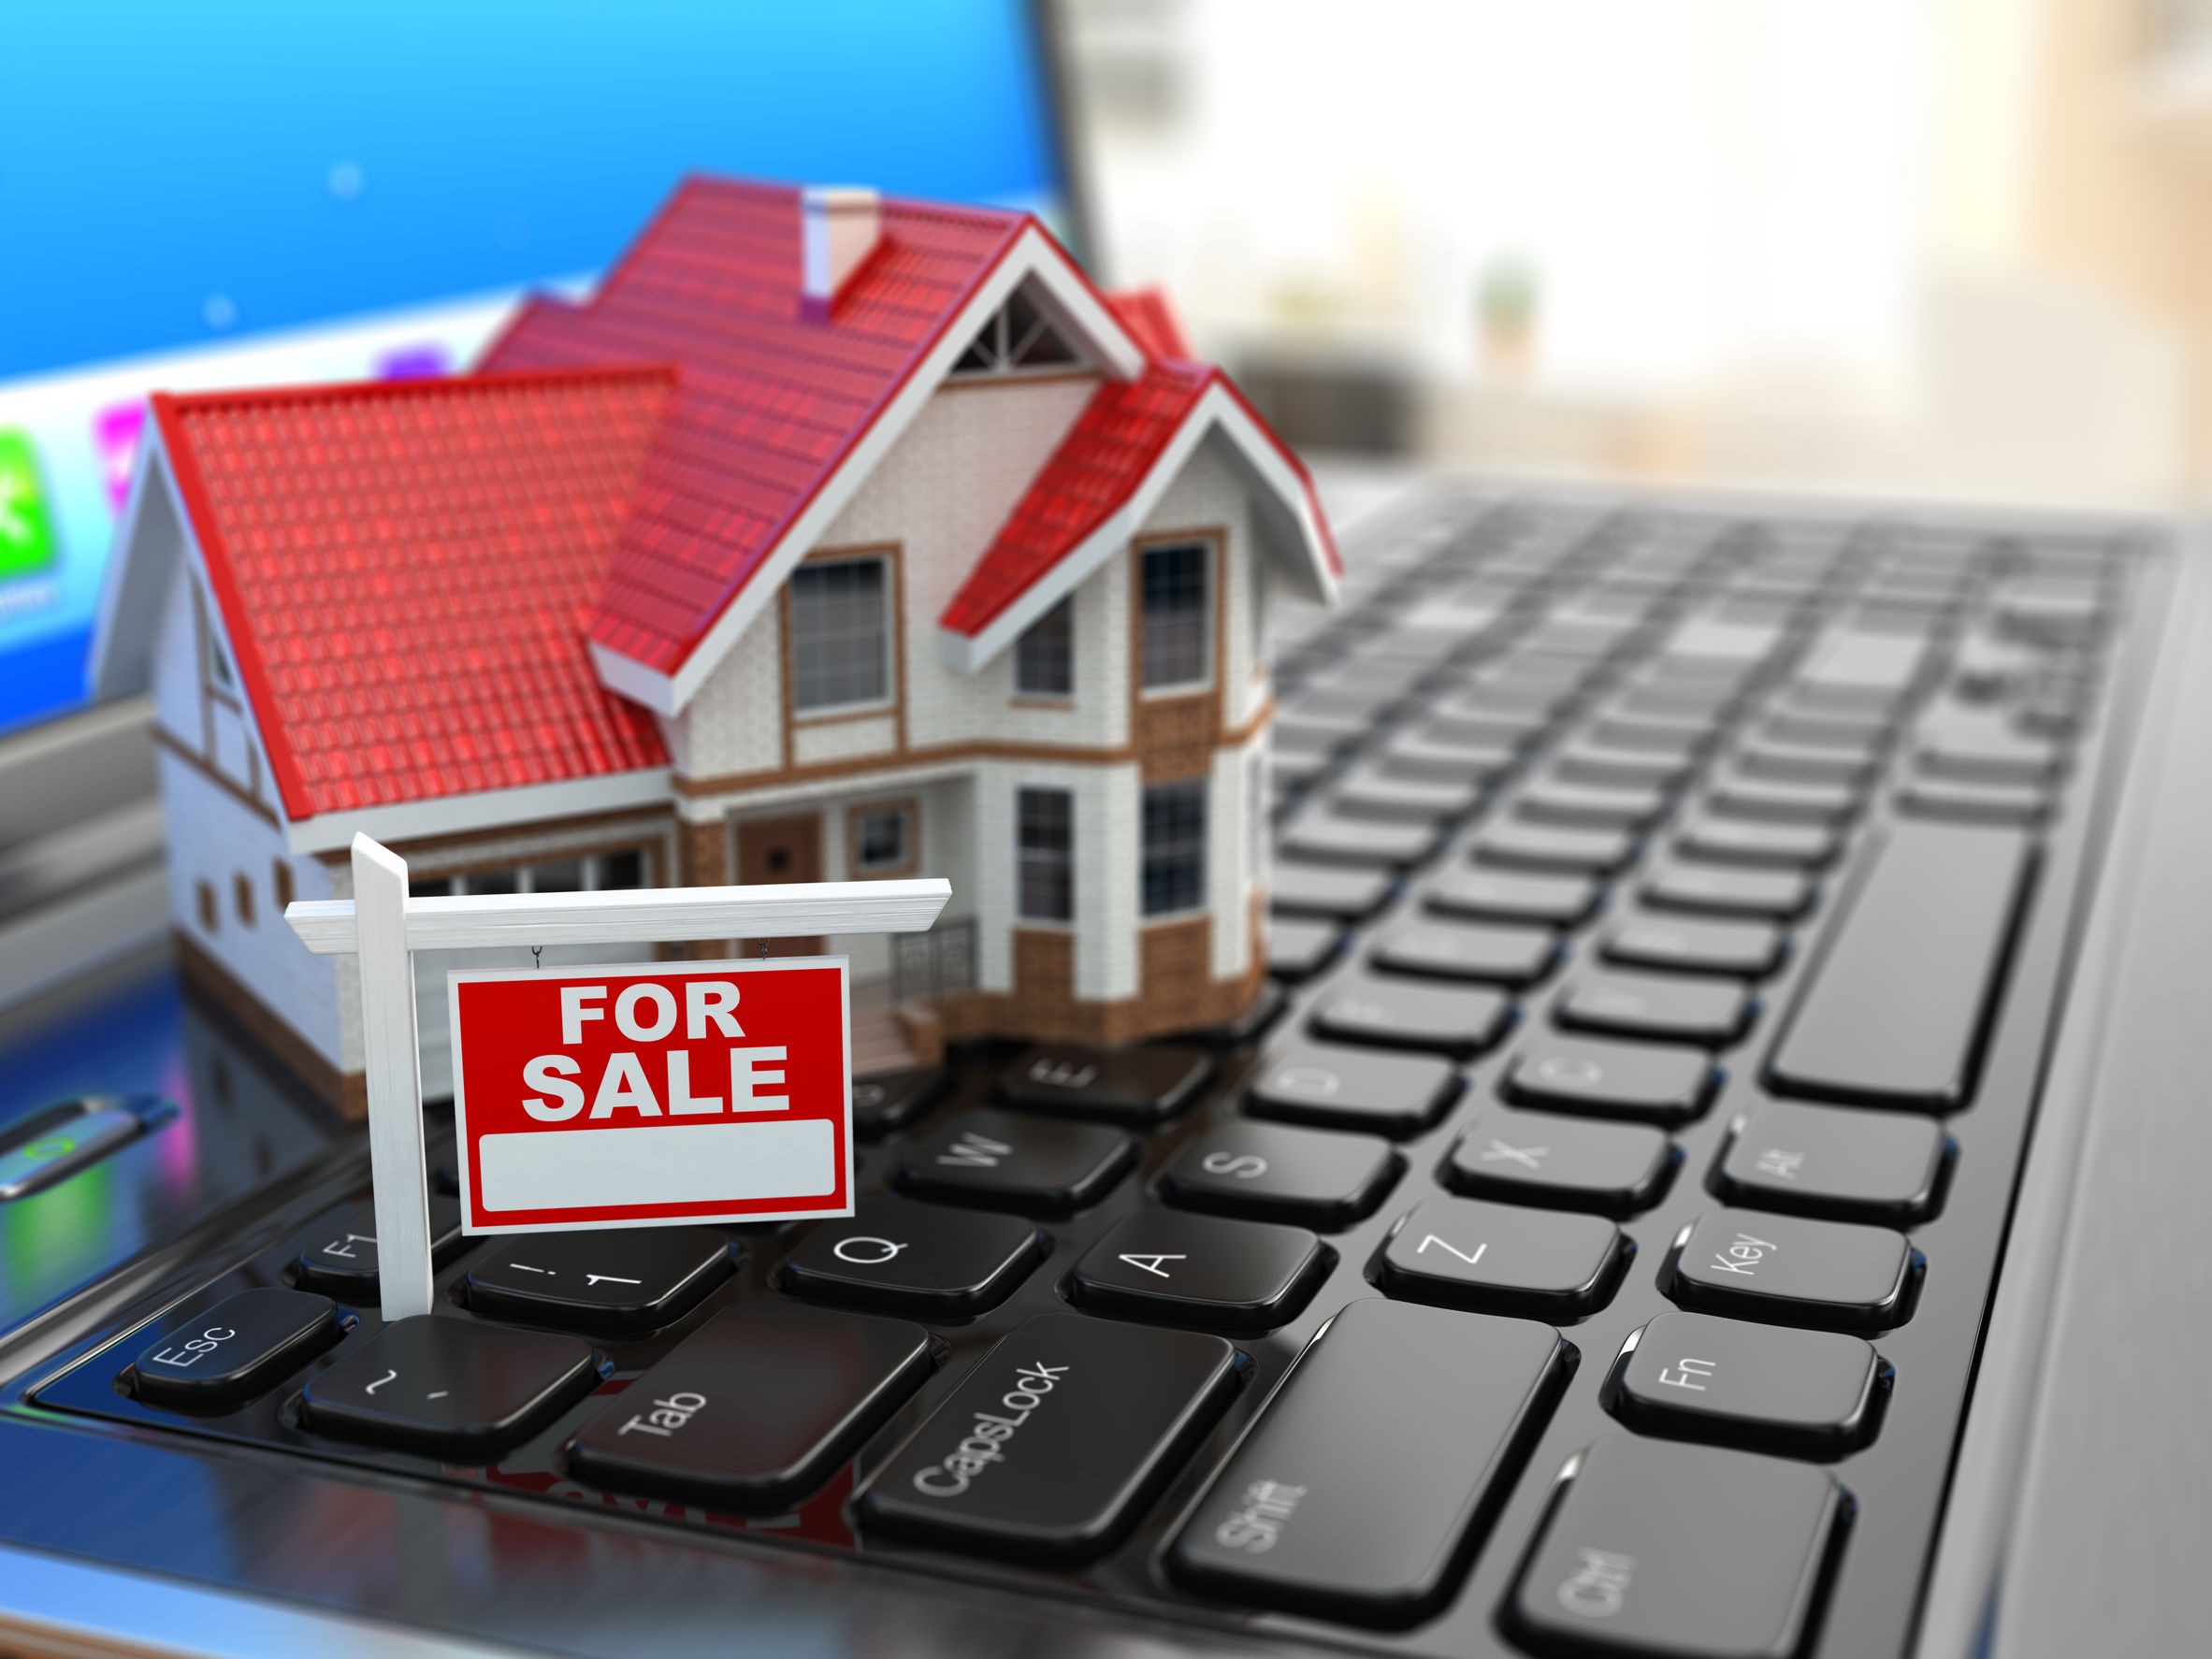  Preforeclosure Homes For Sale